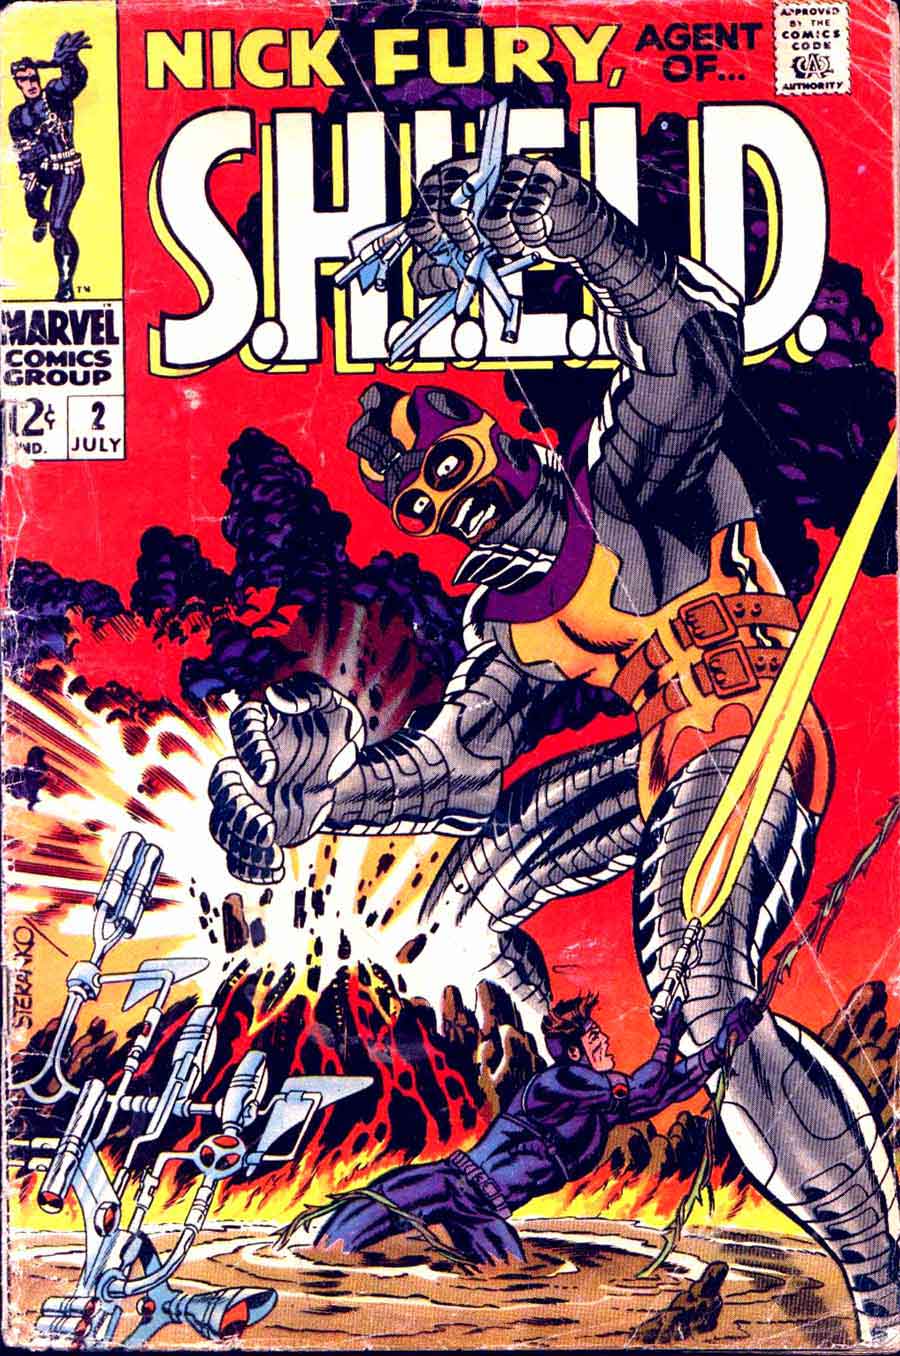 Nick Fury Agent of Shield v1 #2 1960s marvel comic book cover art by Jim Steranko